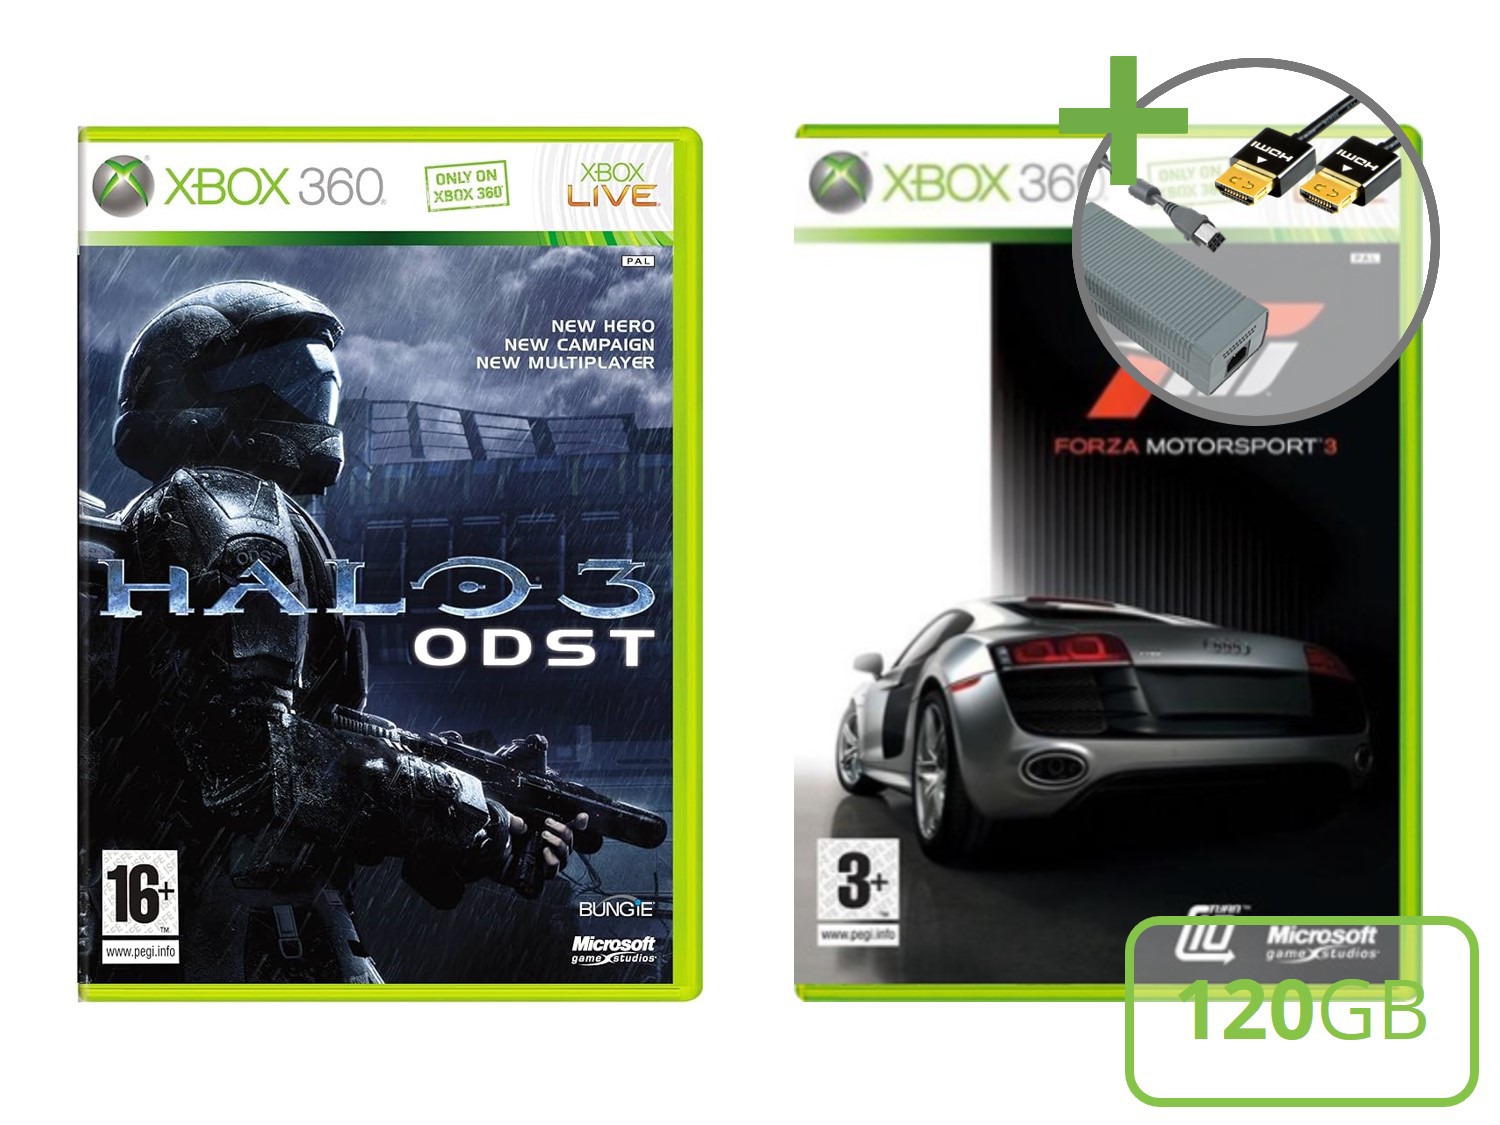 Microsoft Xbox 360 Elite Starter Pack - Forza Motorsport 3 and Halo 3: ODST Edition - Xbox 360 Hardware - 5